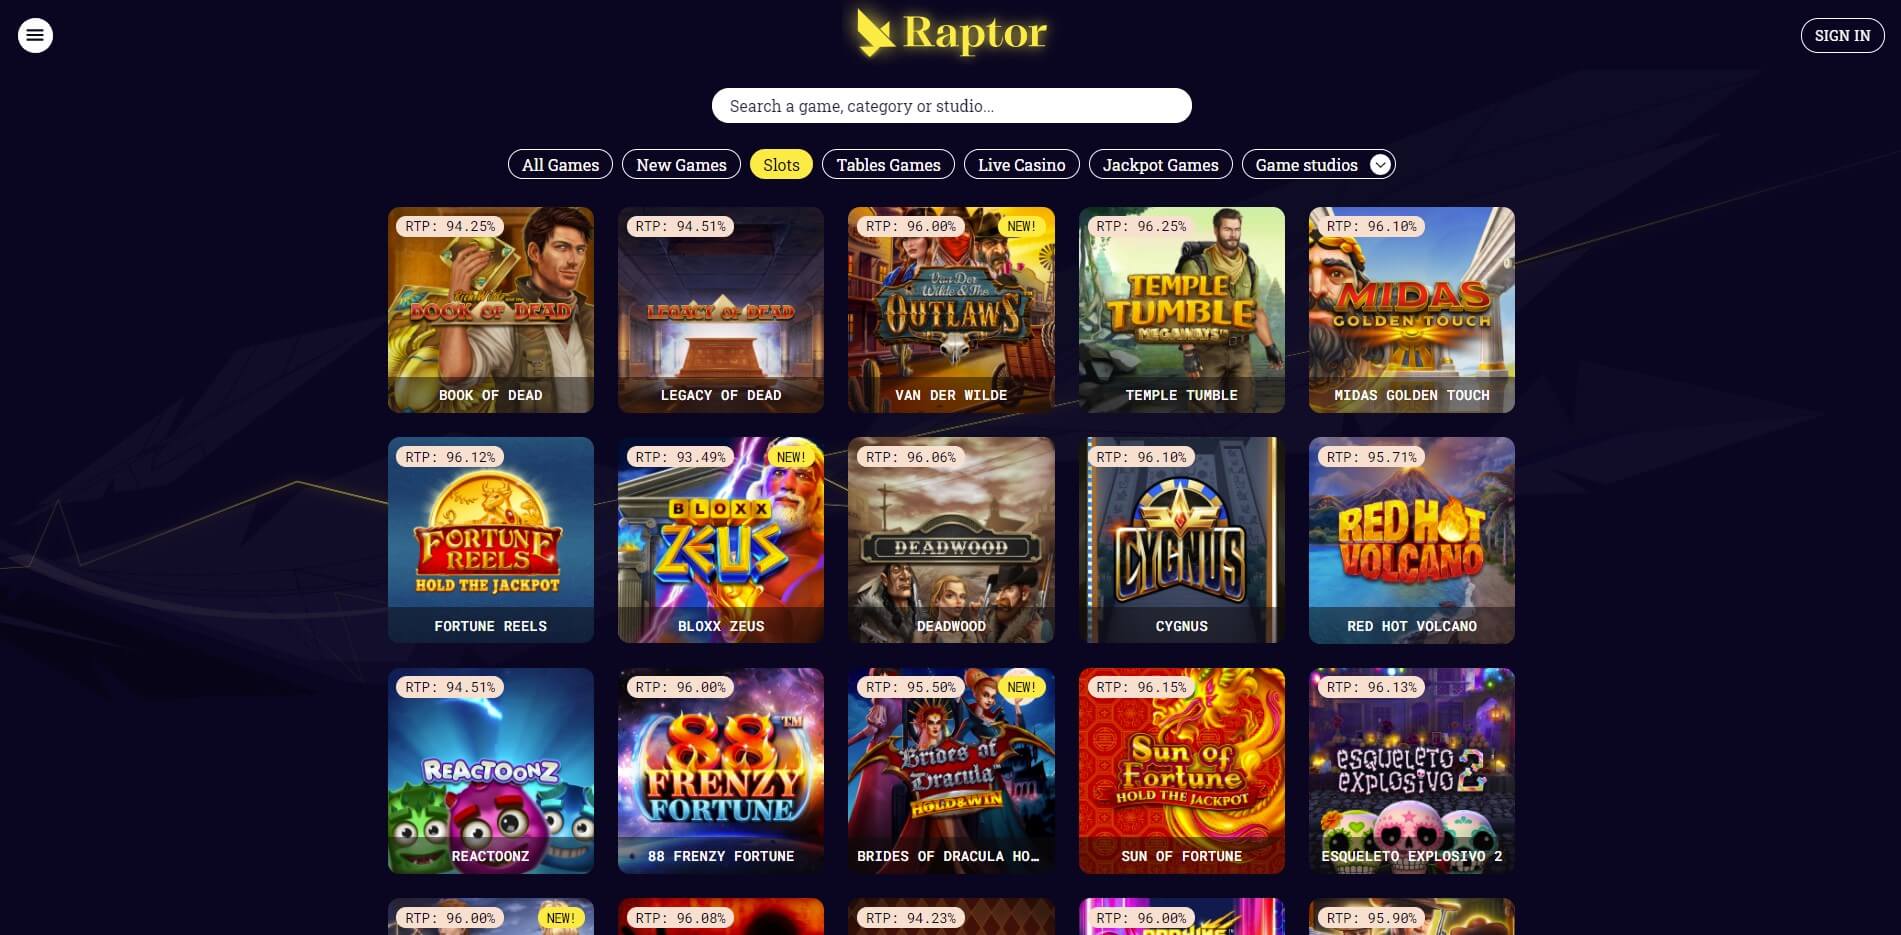 Games at Raptor Casino